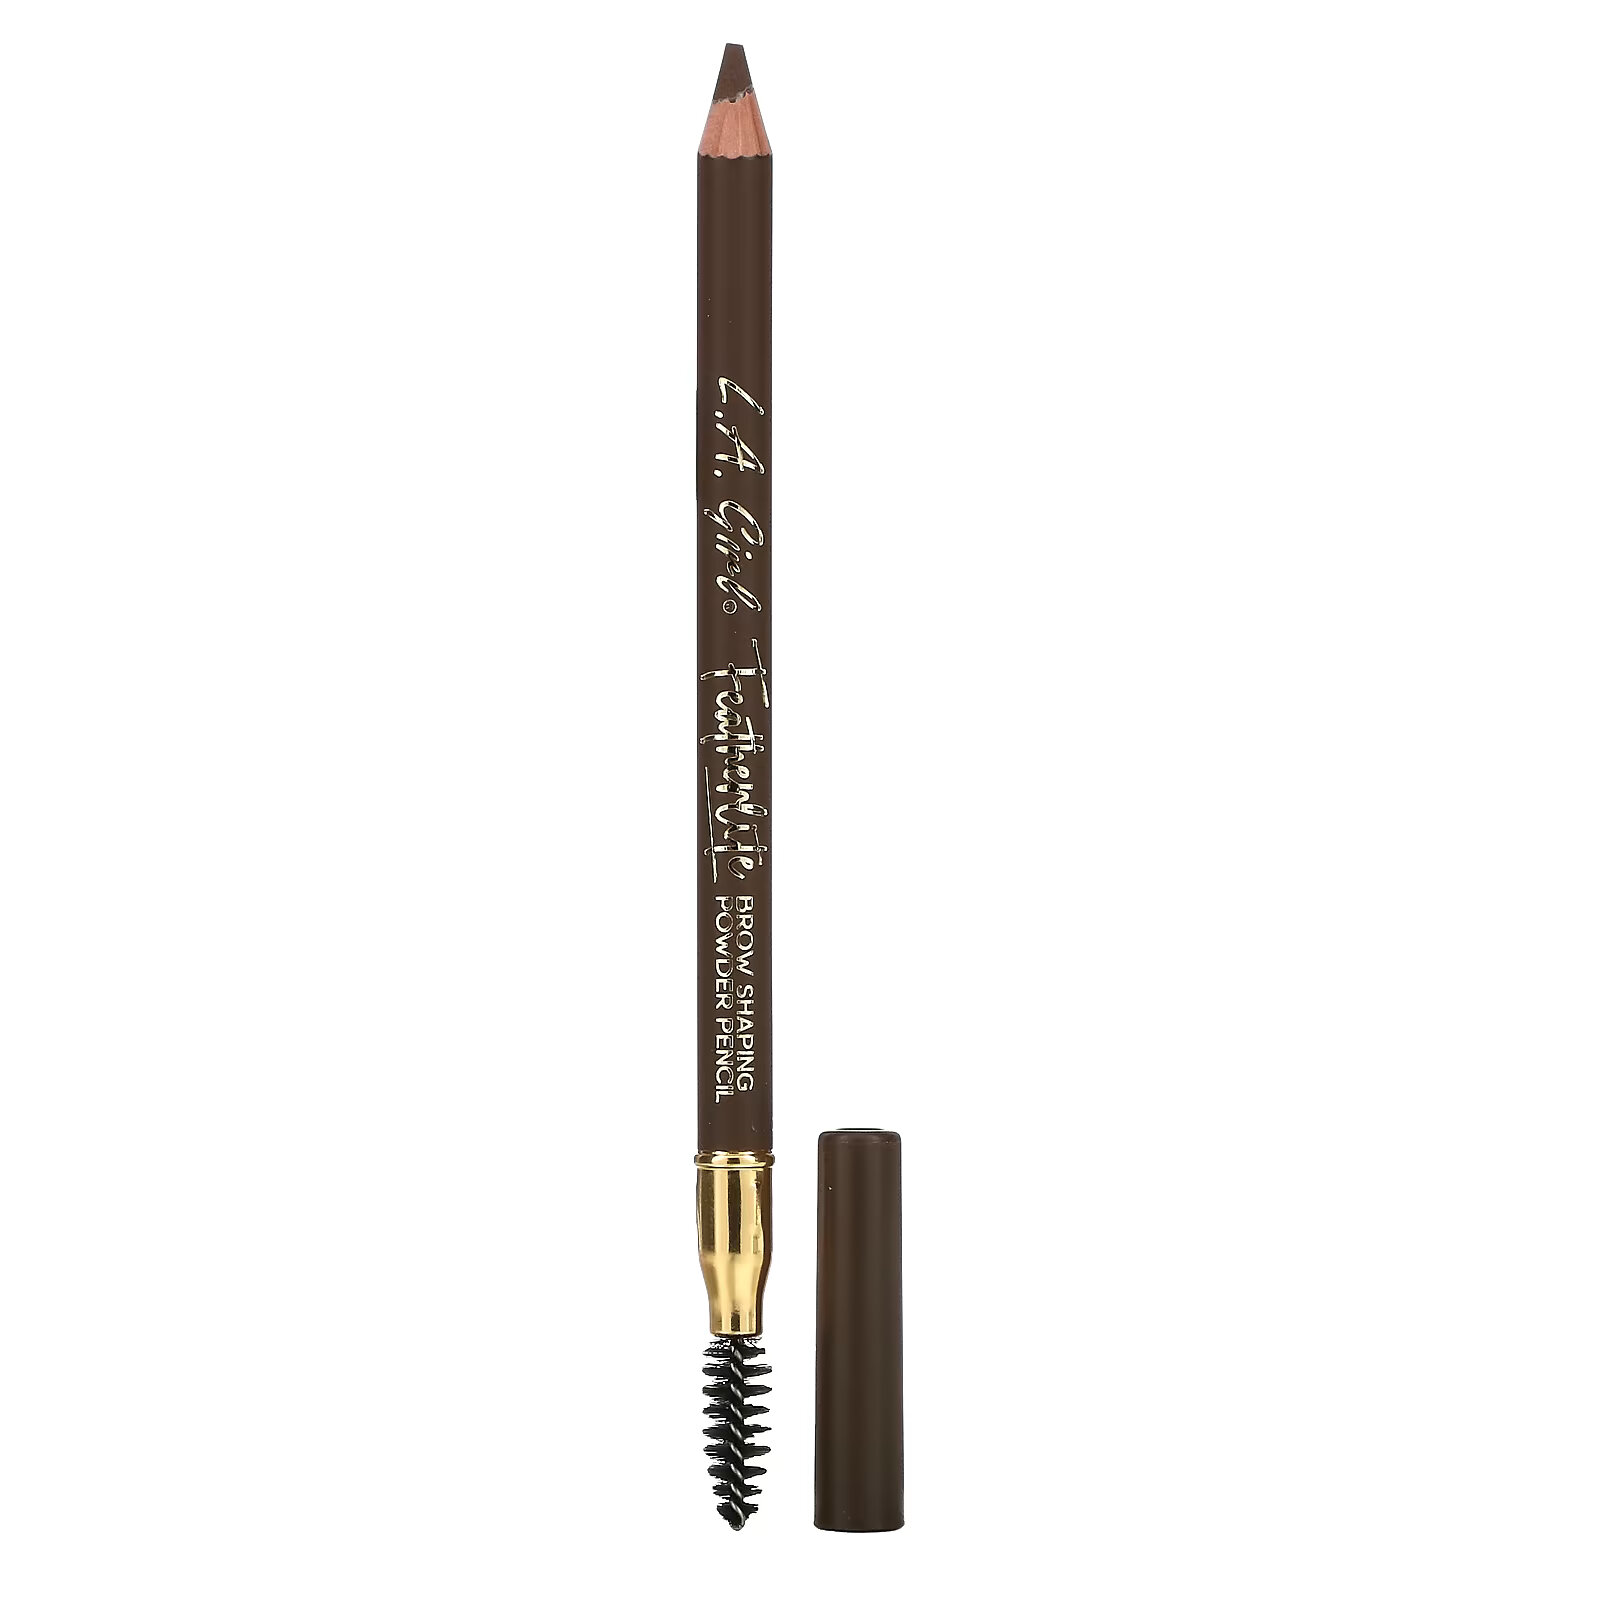 L.A. Girl, Featherlite, пудра-карандаш для бровей, средний коричневый, 1,1 г (0,04 унции) карандаш для бровей shady slim средний коричневый 0 003 унции 0 08 г l a girl